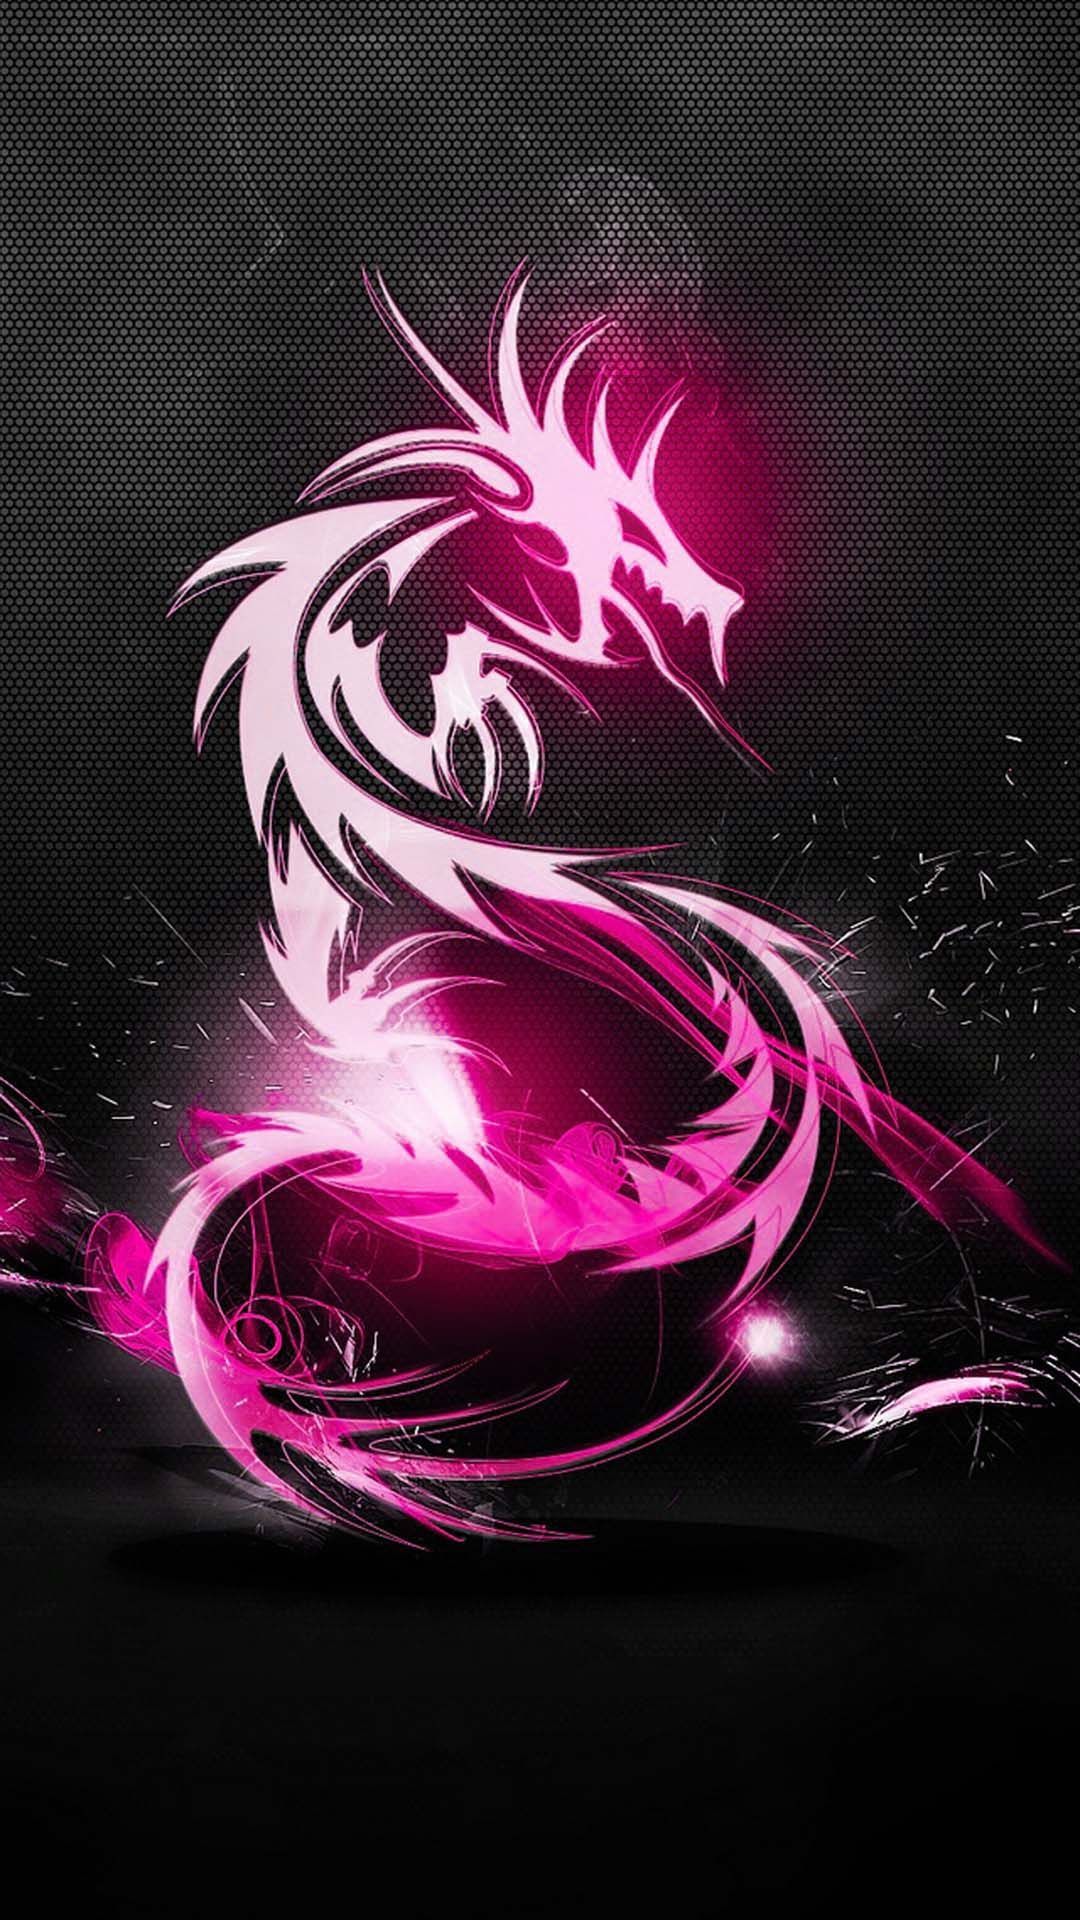 Dragon (Pink). Cool iPhone8 wallpaper. Dragon wallpaper iphone, Cute dragons, Art wallpaper iphone